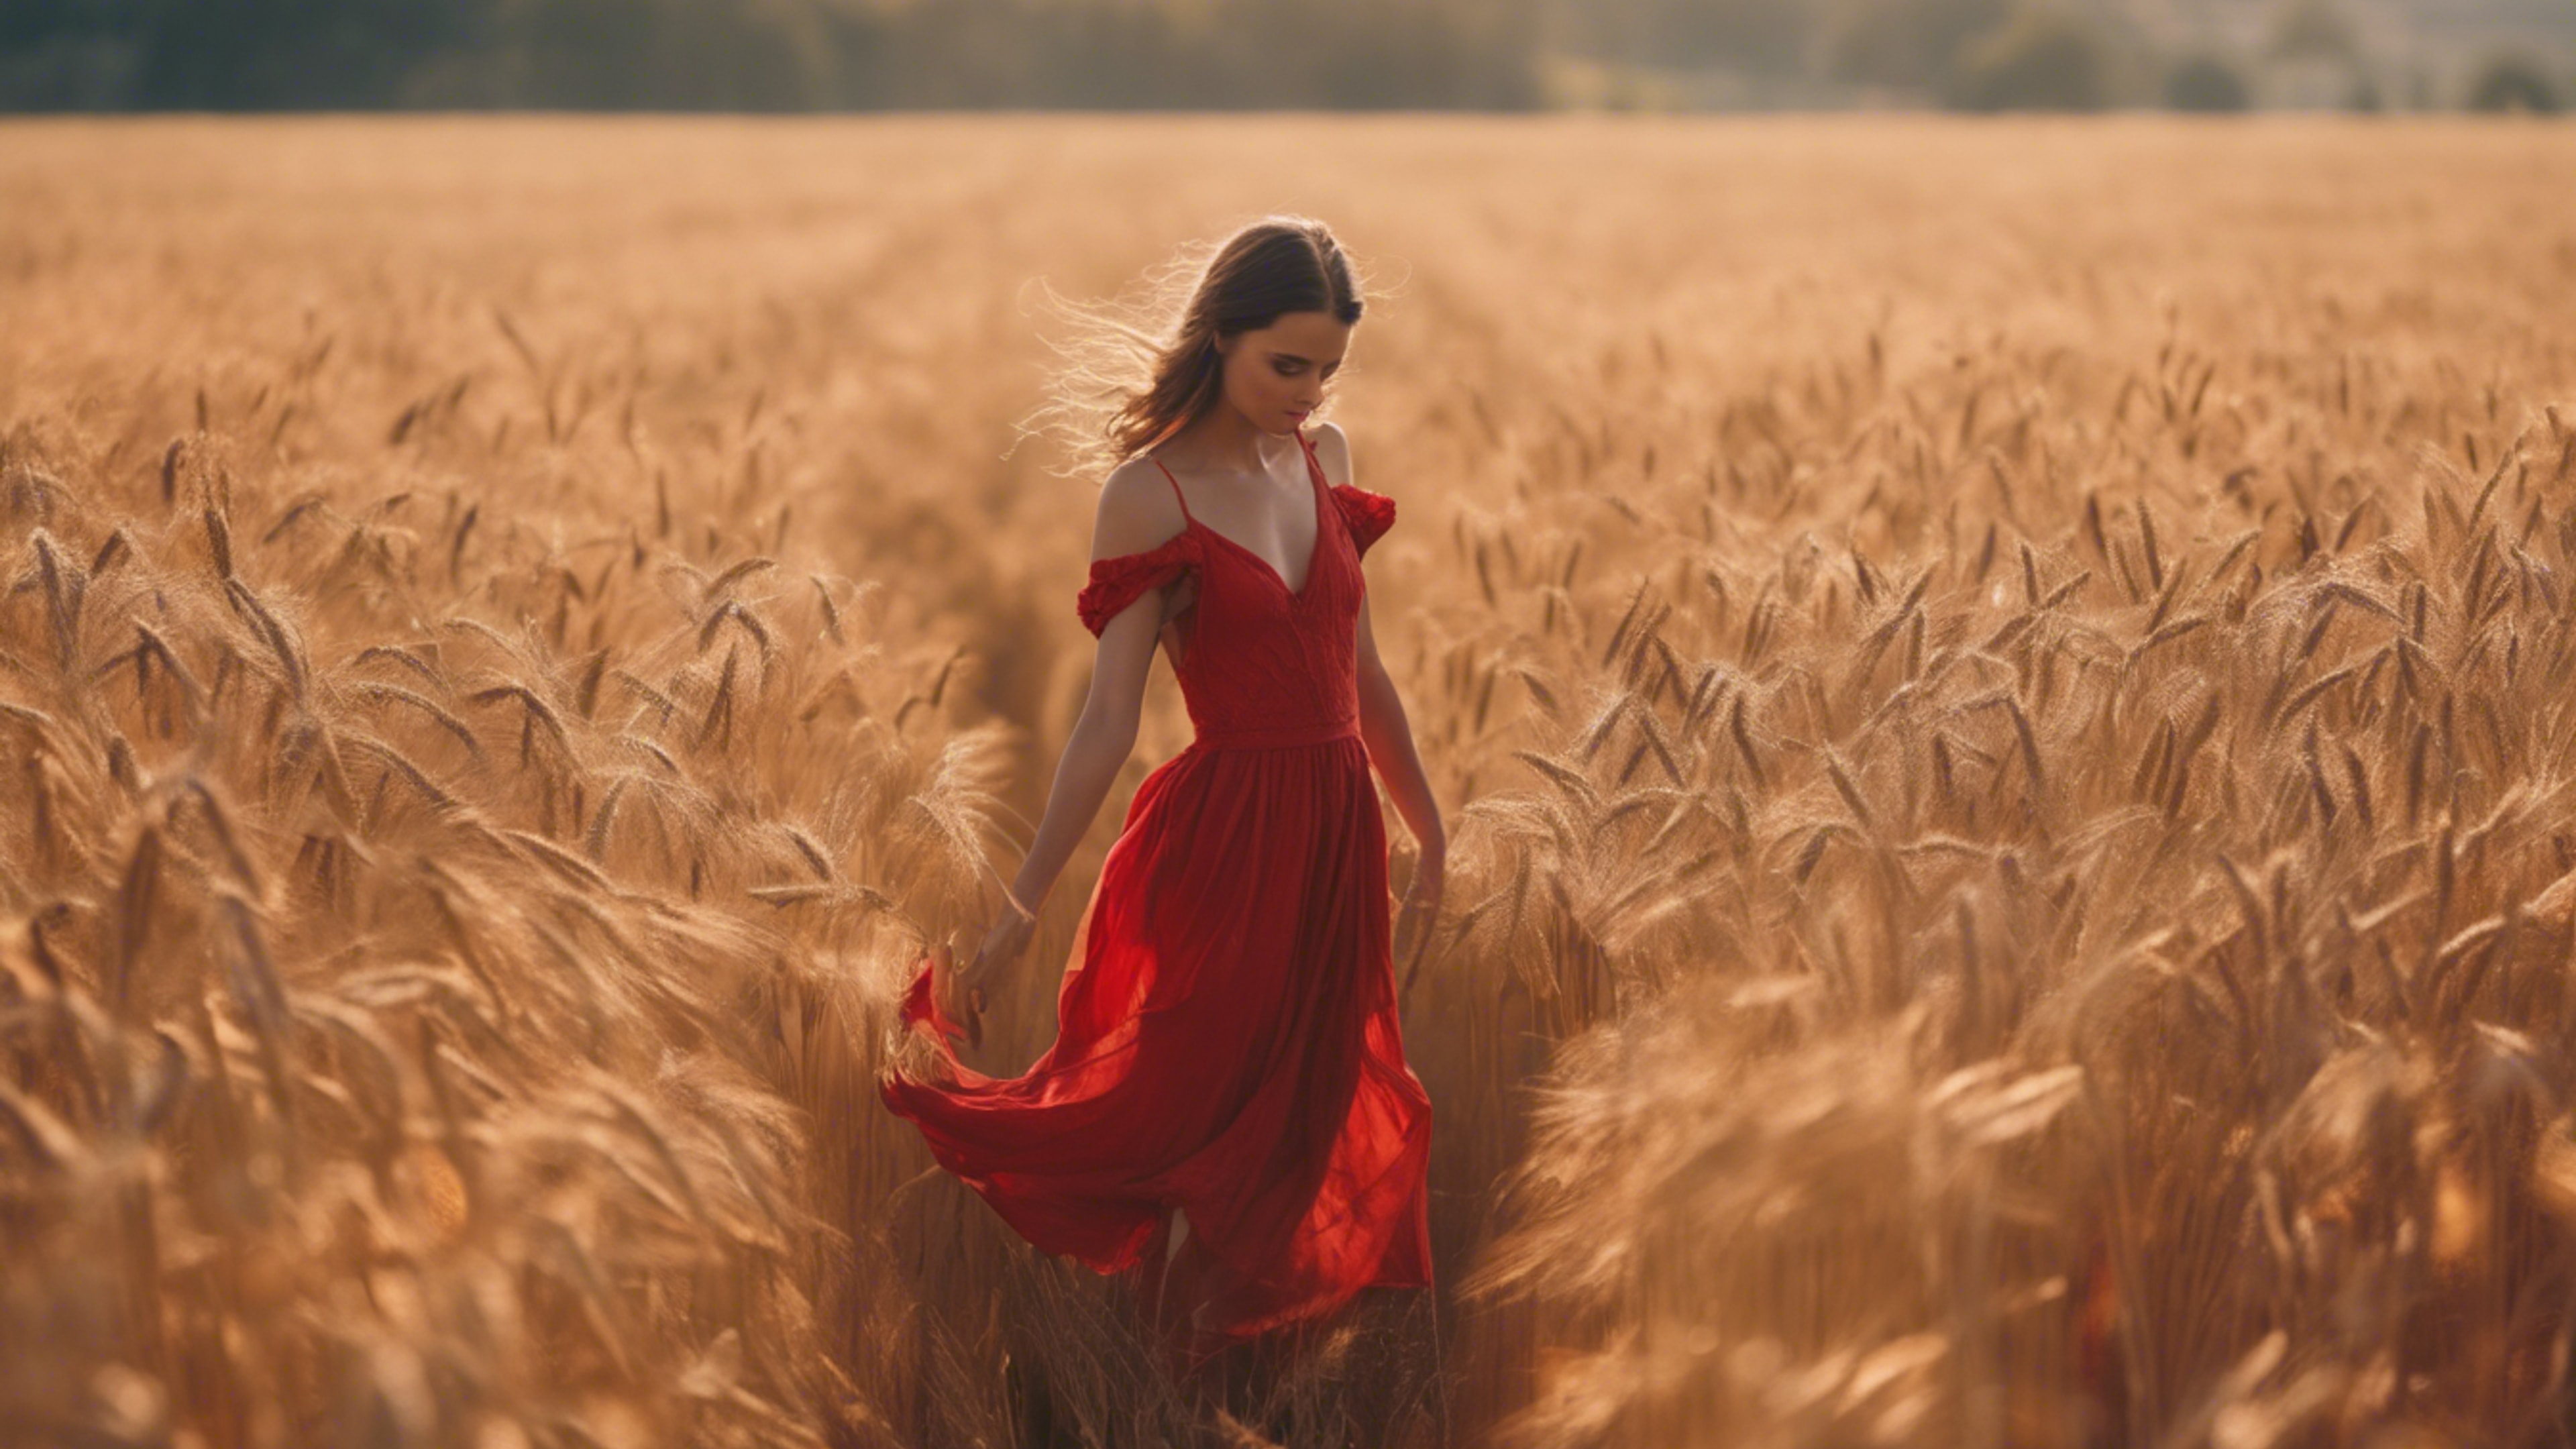 A young girl in a fiery red dress dancing in a golden wheat field. Tapeta[3d2bbc59672c41dea075]